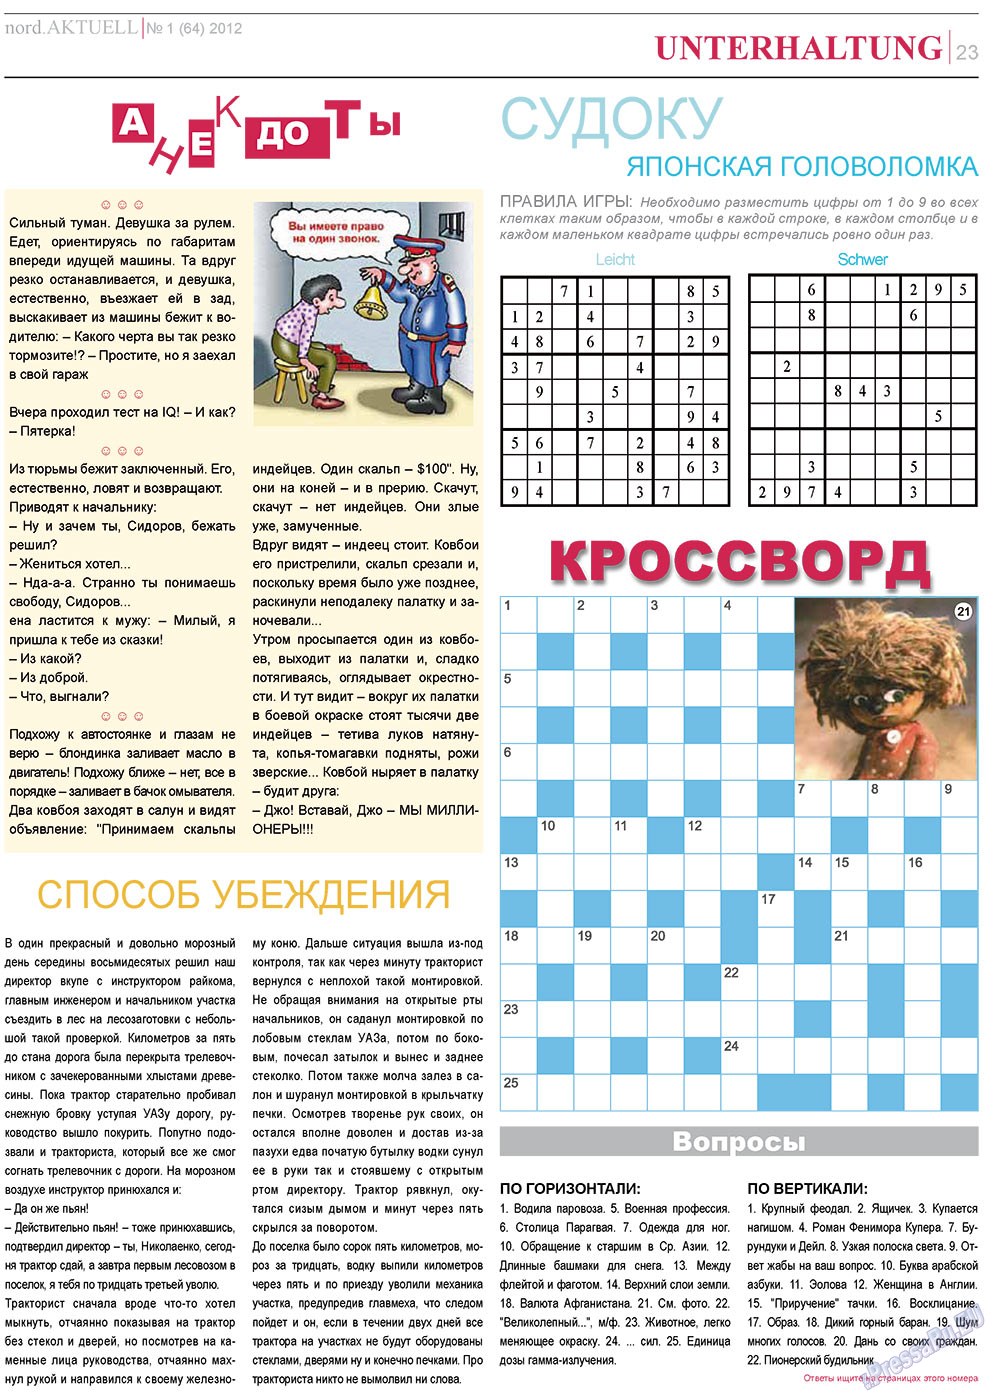 nord.Aktuell, газета. 2012 №1 стр.23